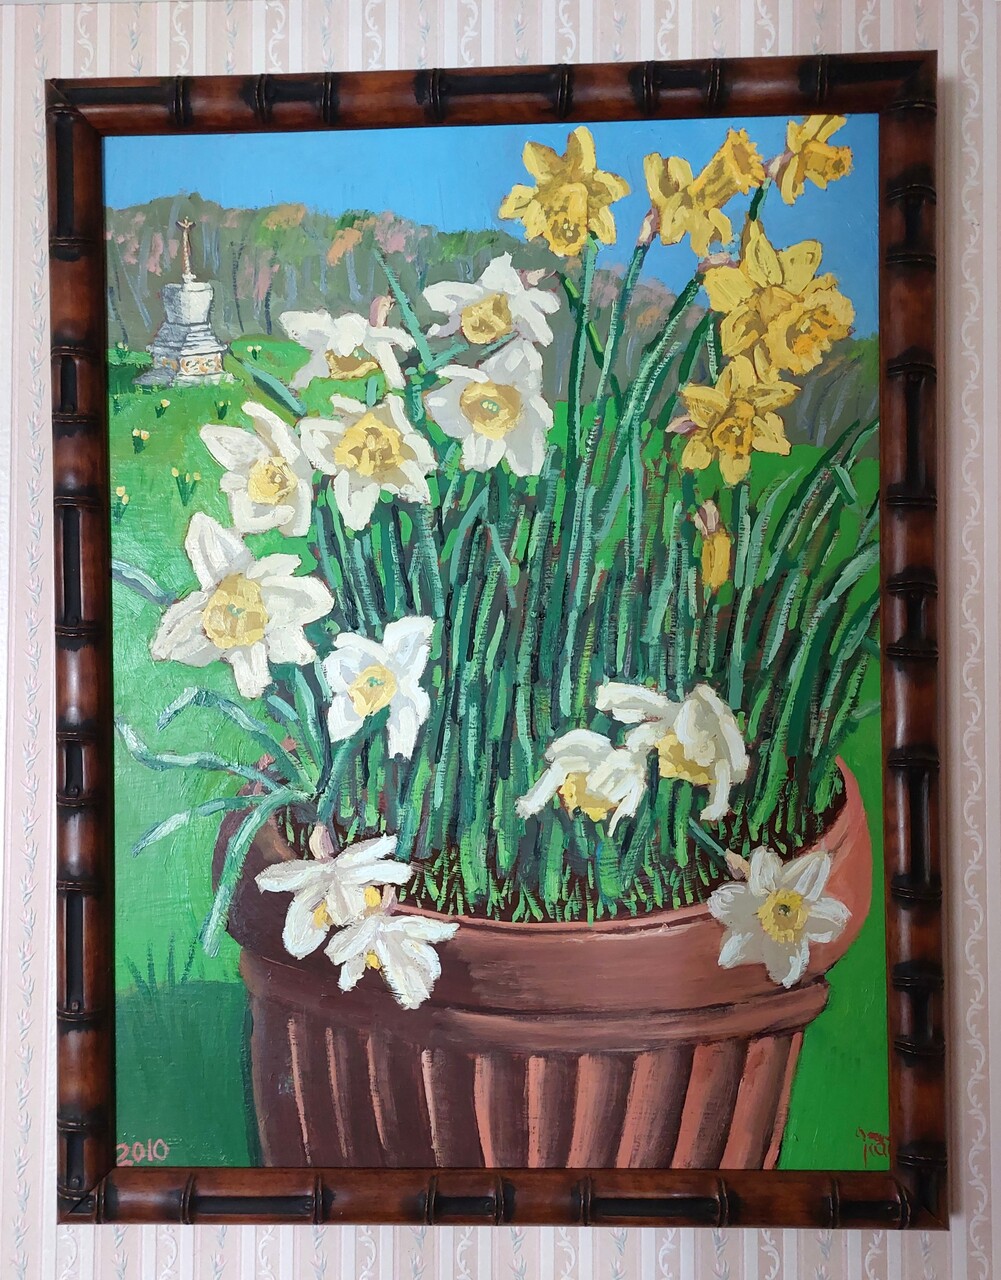 Daffodill-Brunch-2010-painting.jpg